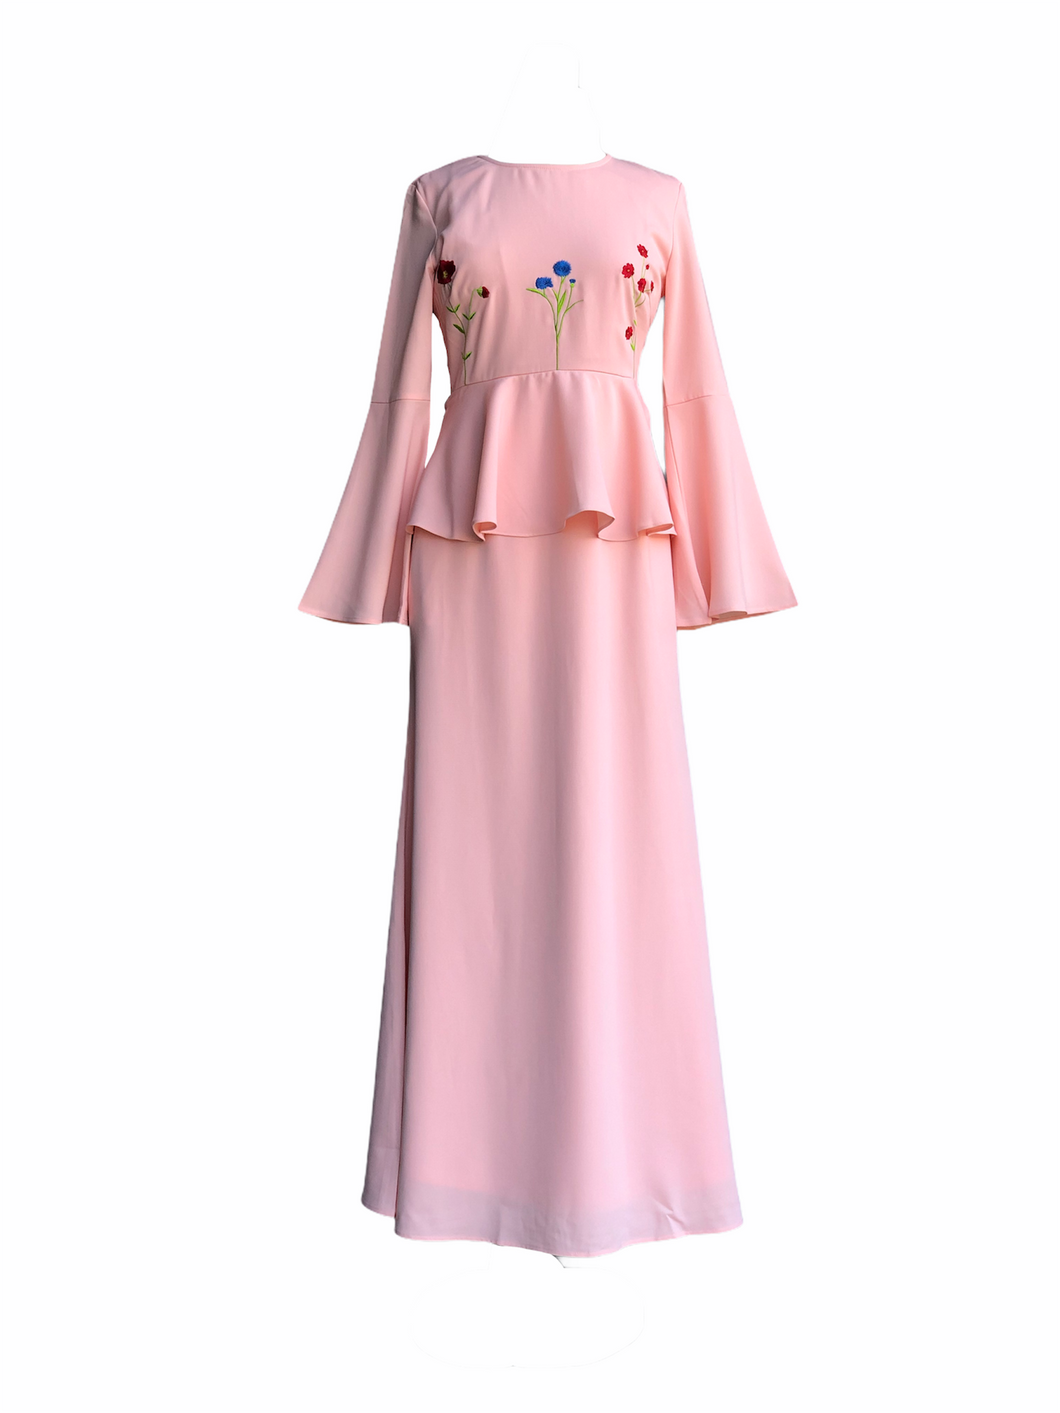 Almy Peplum Dress in Pink